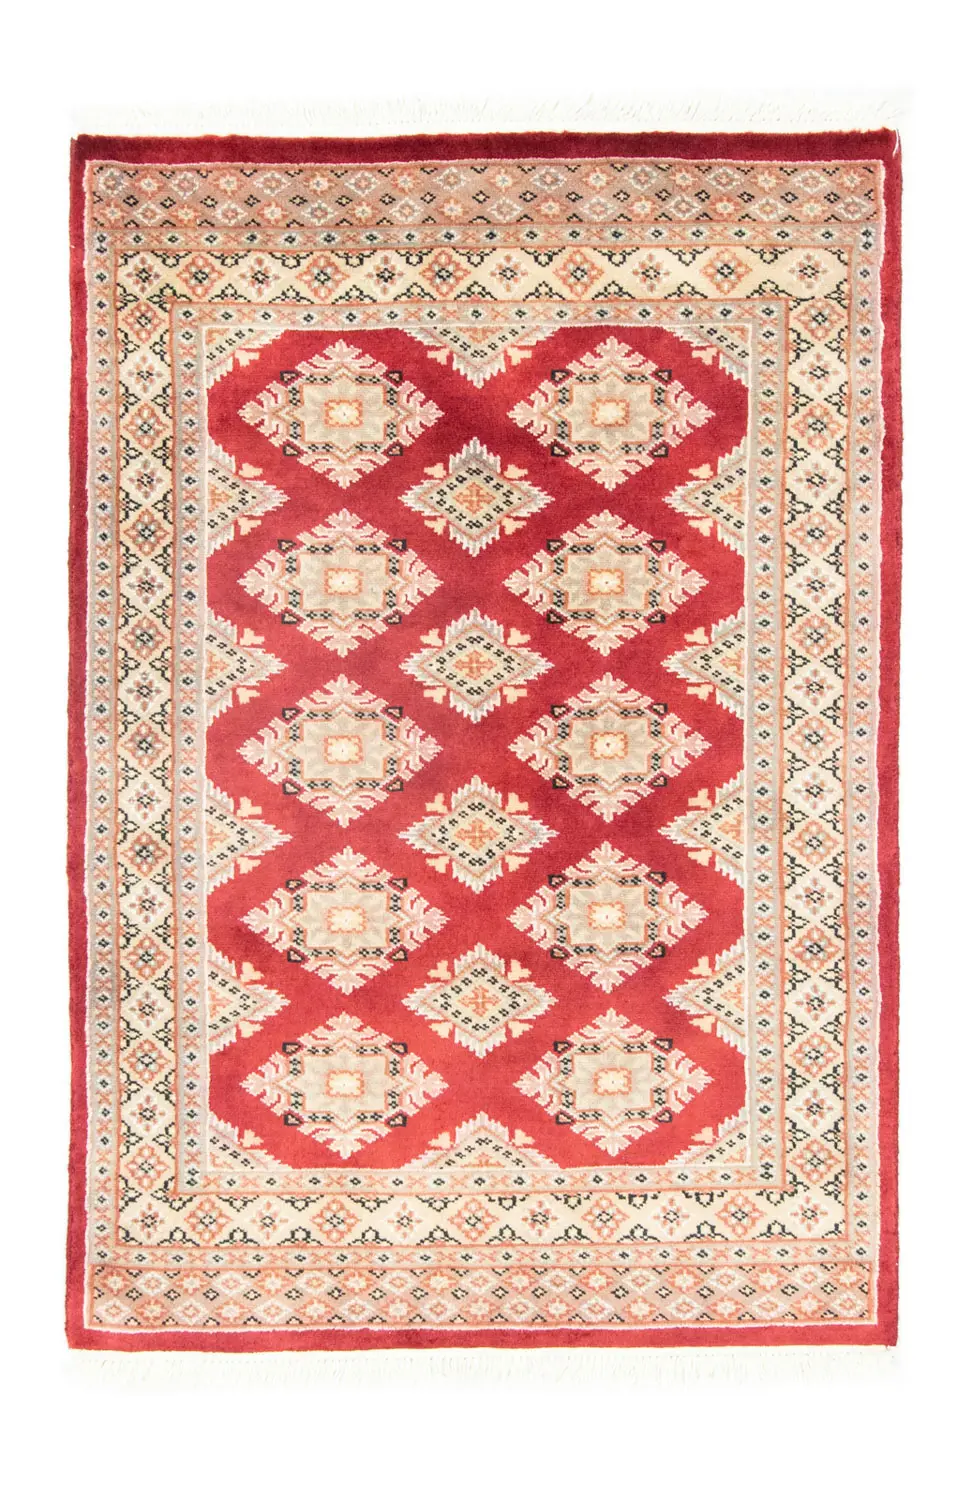 116 Teppich x 78 - - cm Pakistan rot